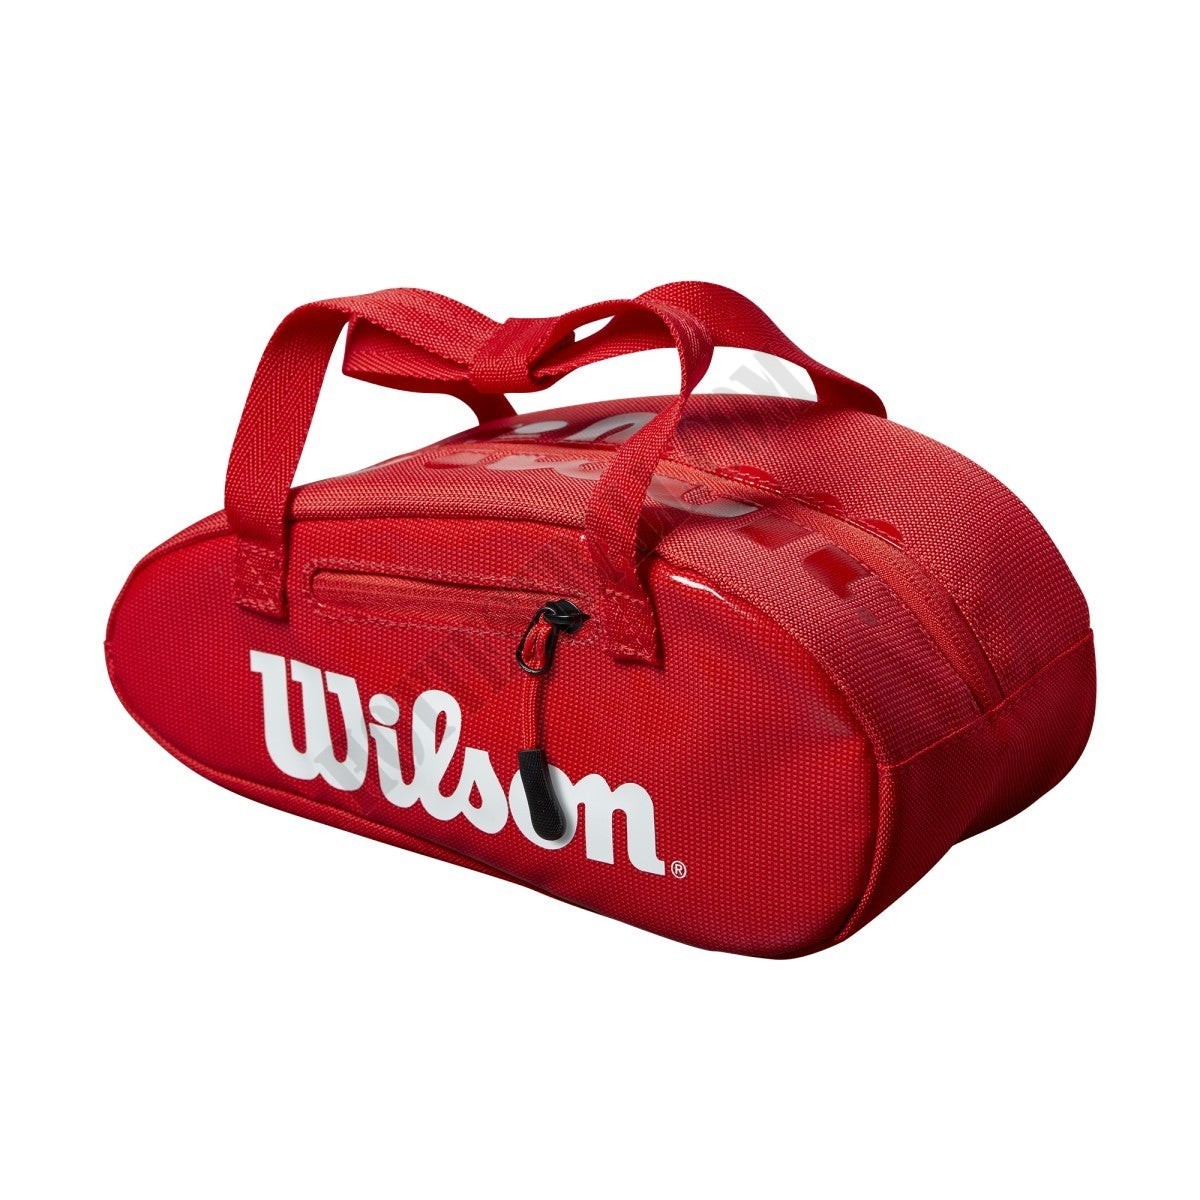 Mini Super Tour Bag - Wilson Discount Store - Mini Super Tour Bag - Wilson Discount Store